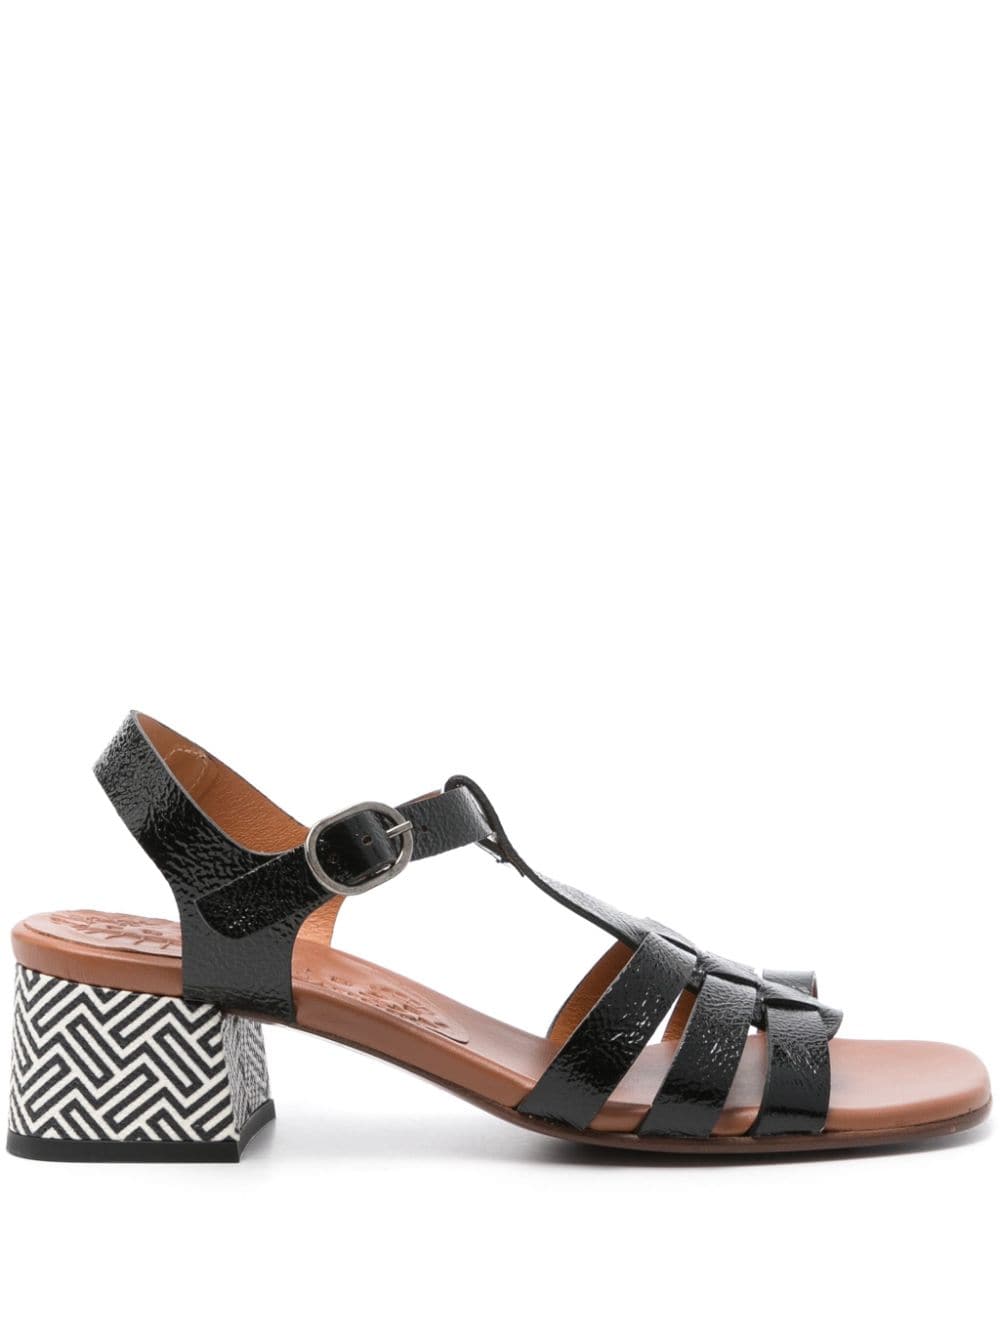 Chie Mihara Quakin 35mm sandals Black